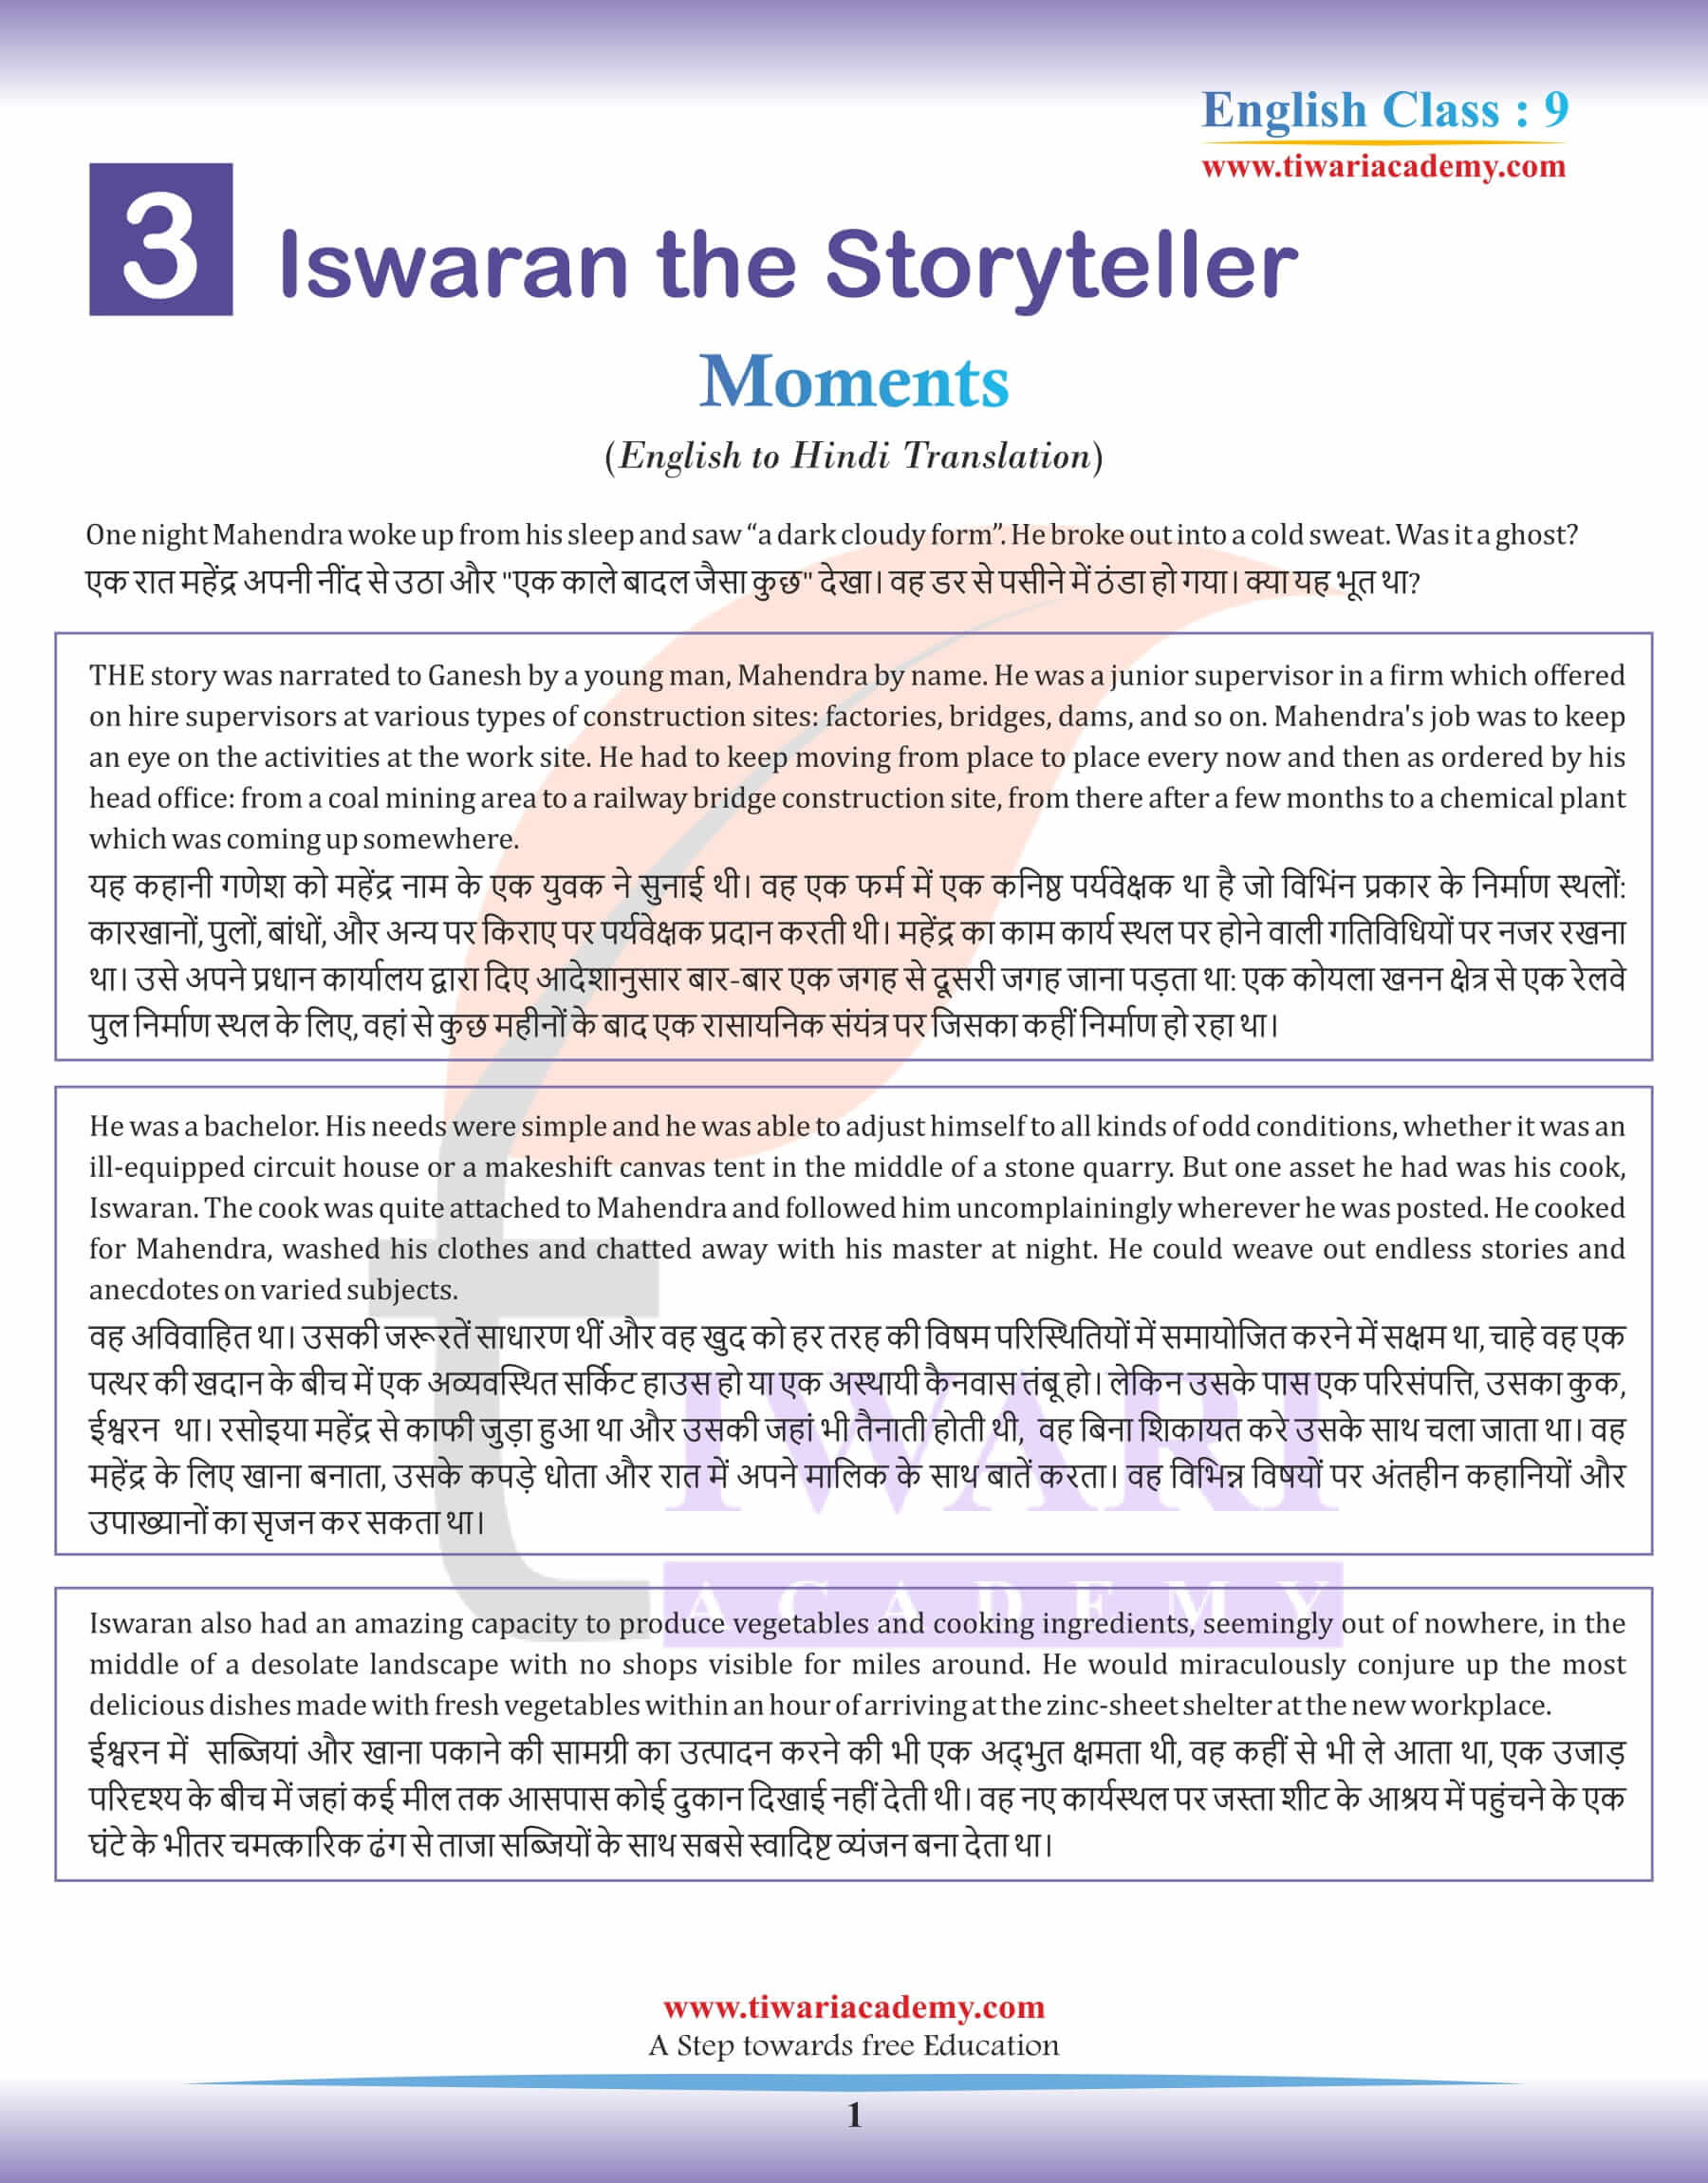 Iswaran the Storyteller